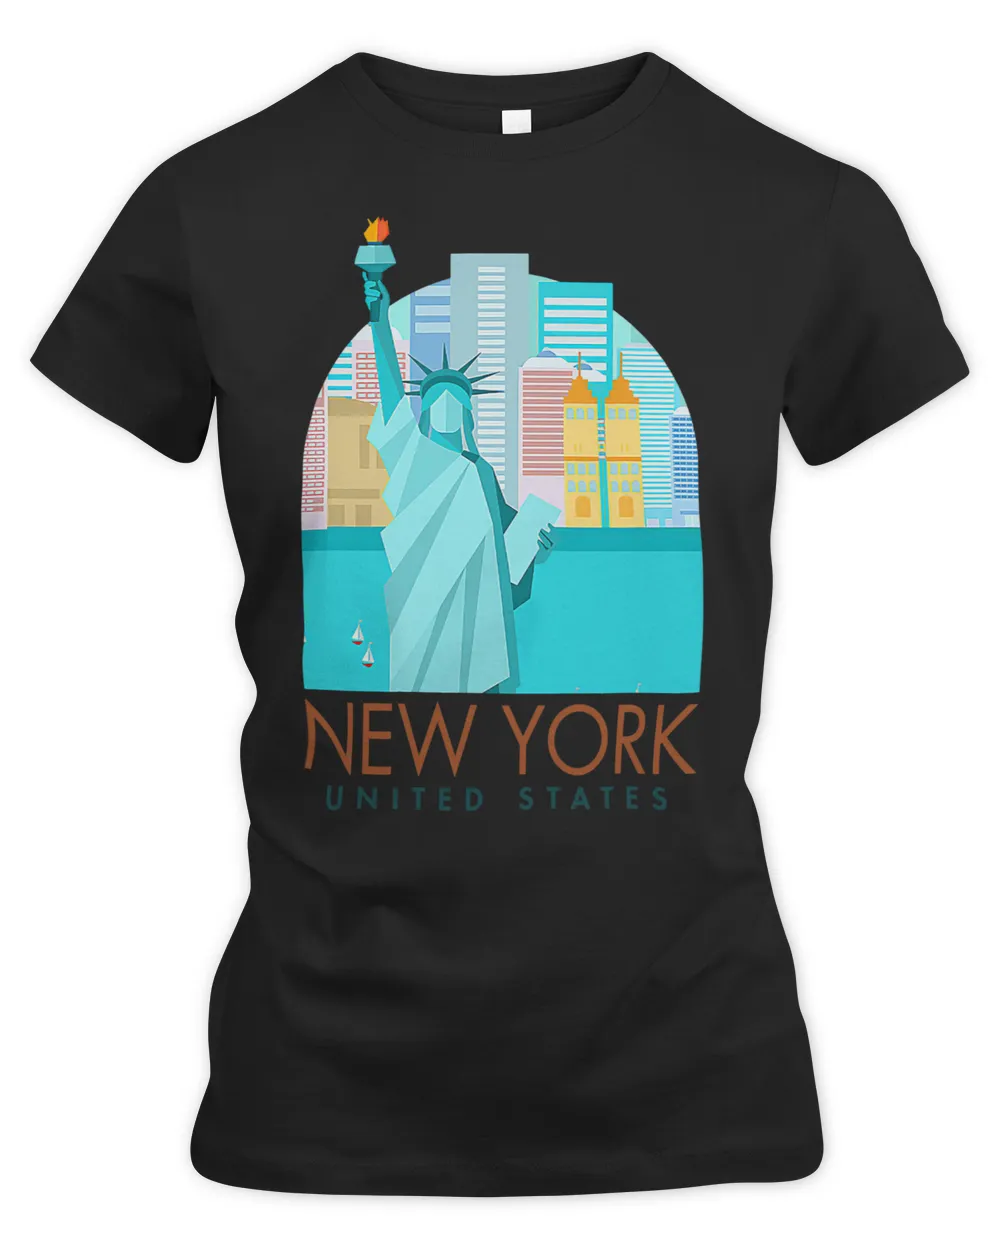 New York United States Traveling New York Travel Poster Trip